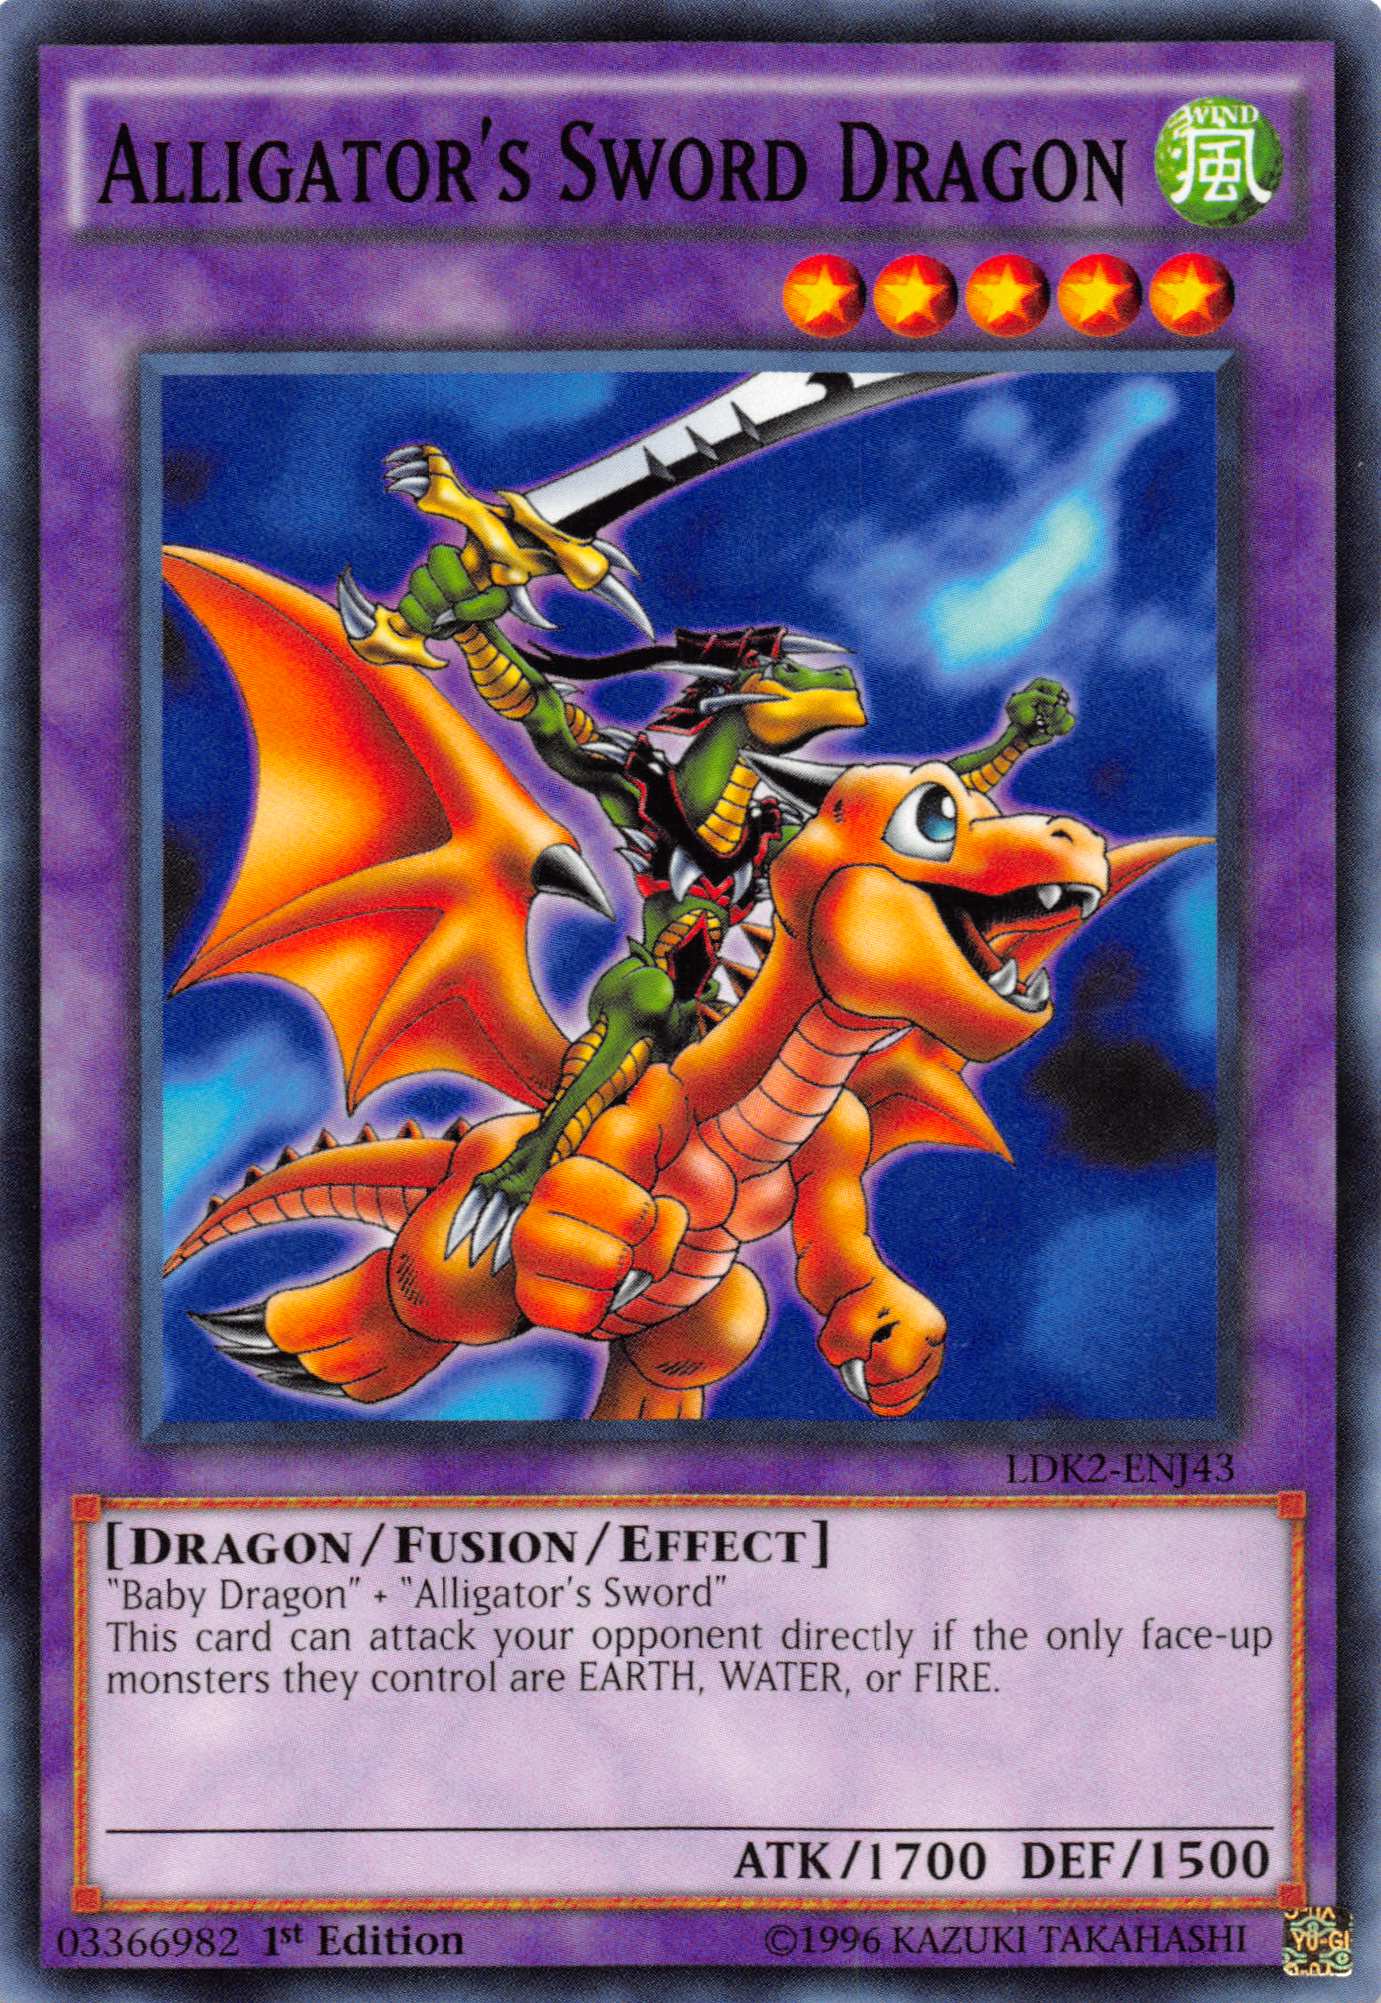 Alligator's Sword Dragon [LDK2-ENJ43] Common